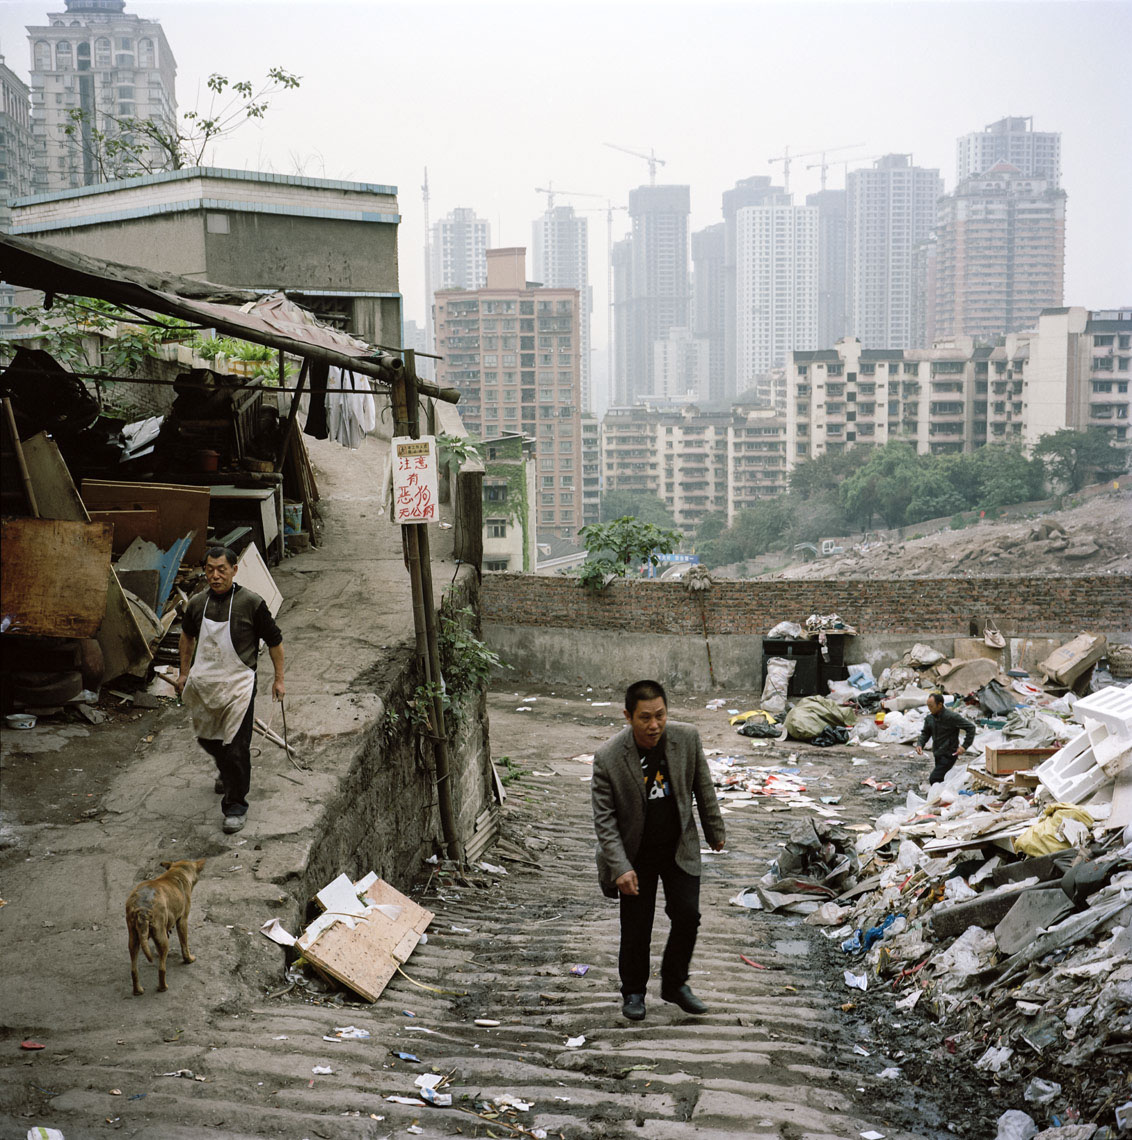 china chongqing analog mamiya 6 mamiya 7 reportage city urbanism   pollution Yangtze changjiang wu jian wu river